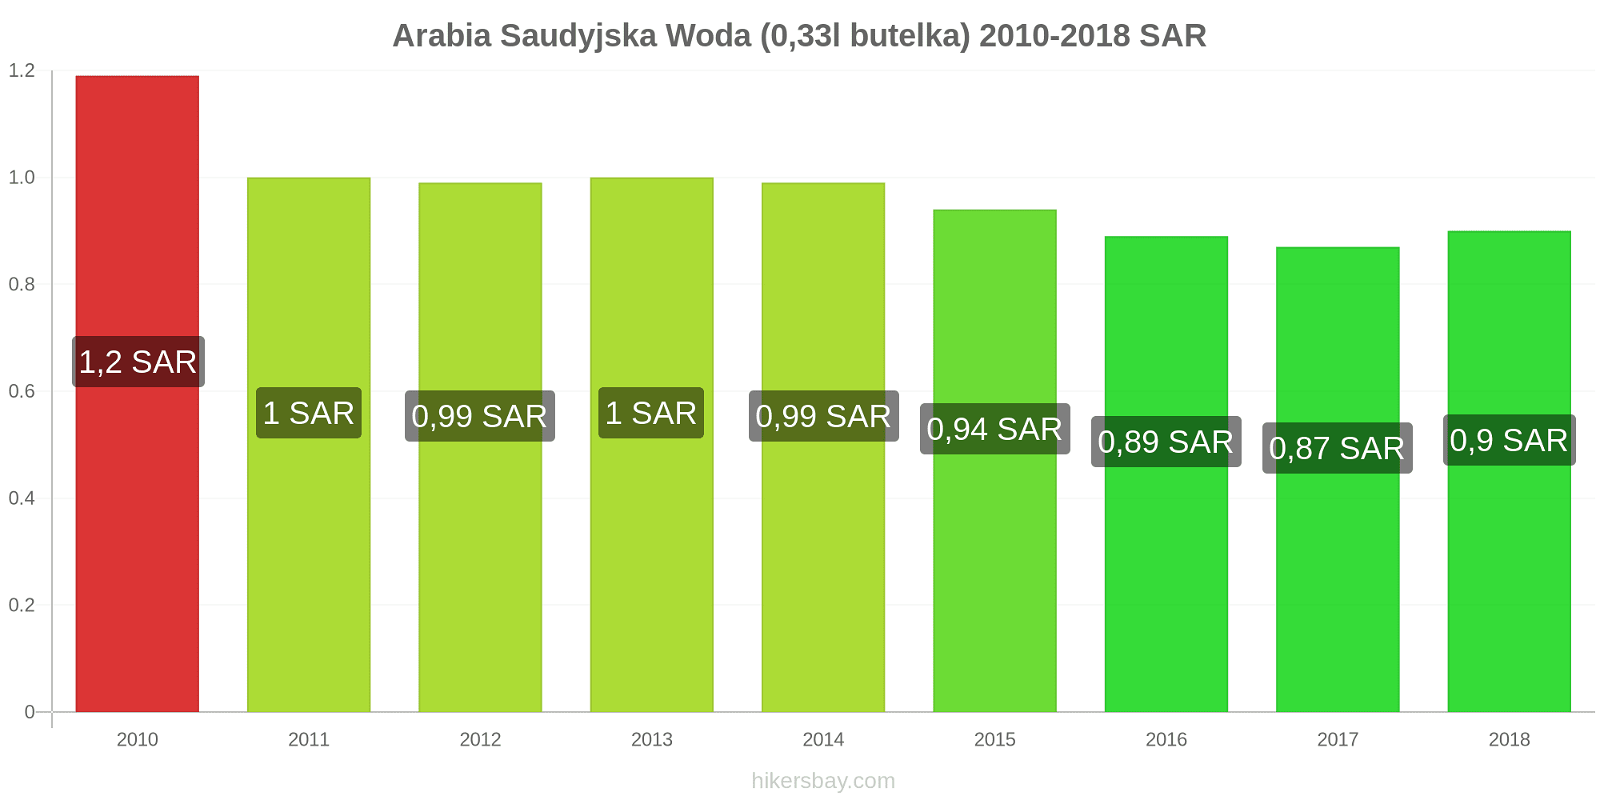 Arabia Saudyjska zmiany cen Woda (0,33l butelka) hikersbay.com